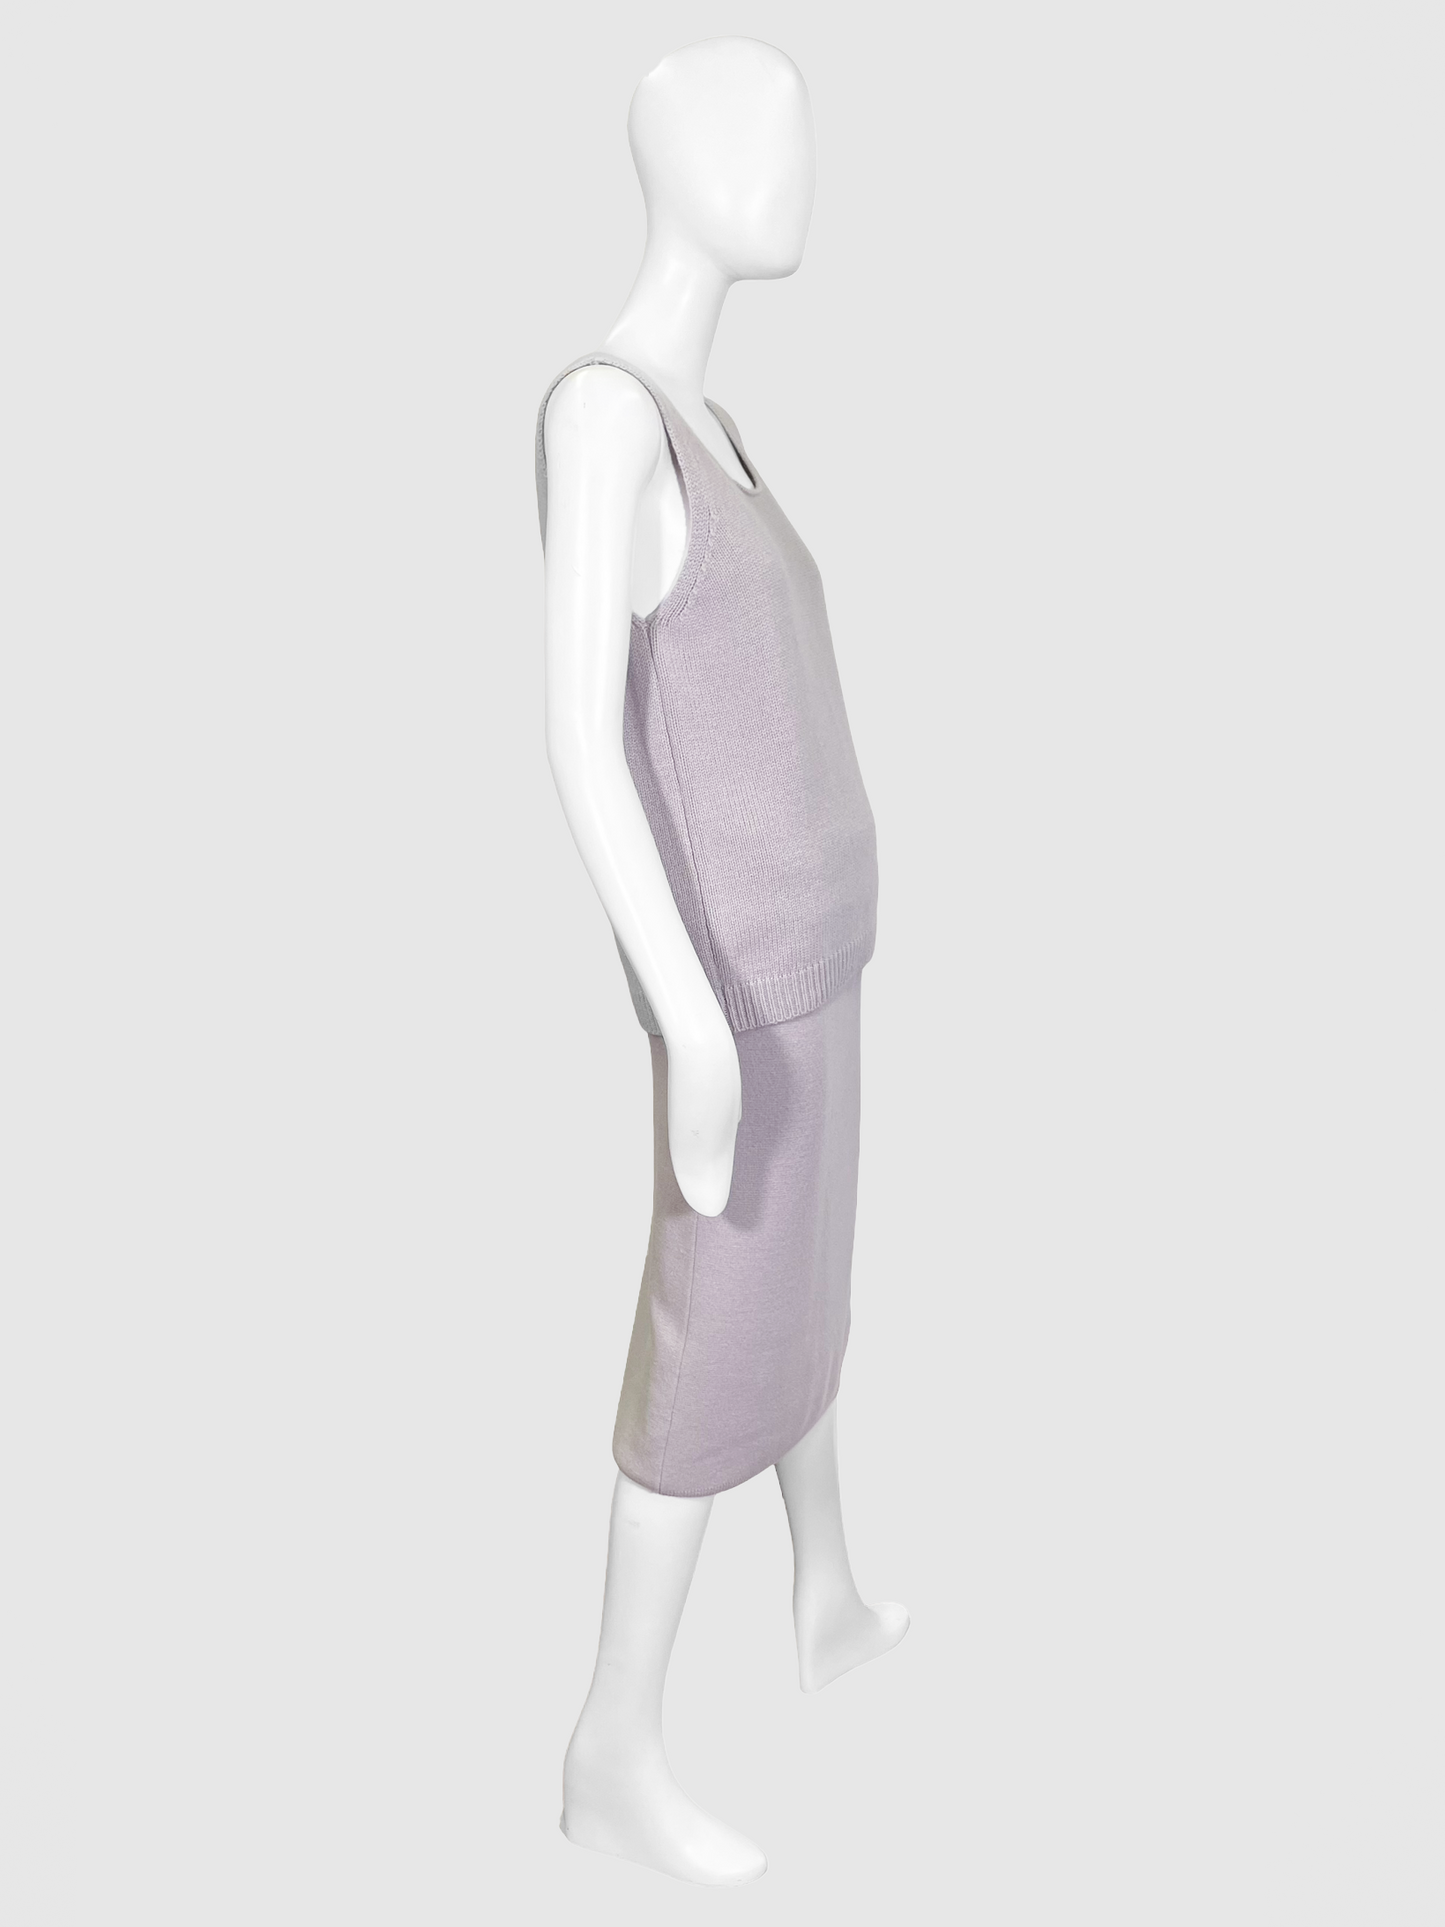 Maria Di Ripablanca Pale Tan Knitted Dress Set - Size 12